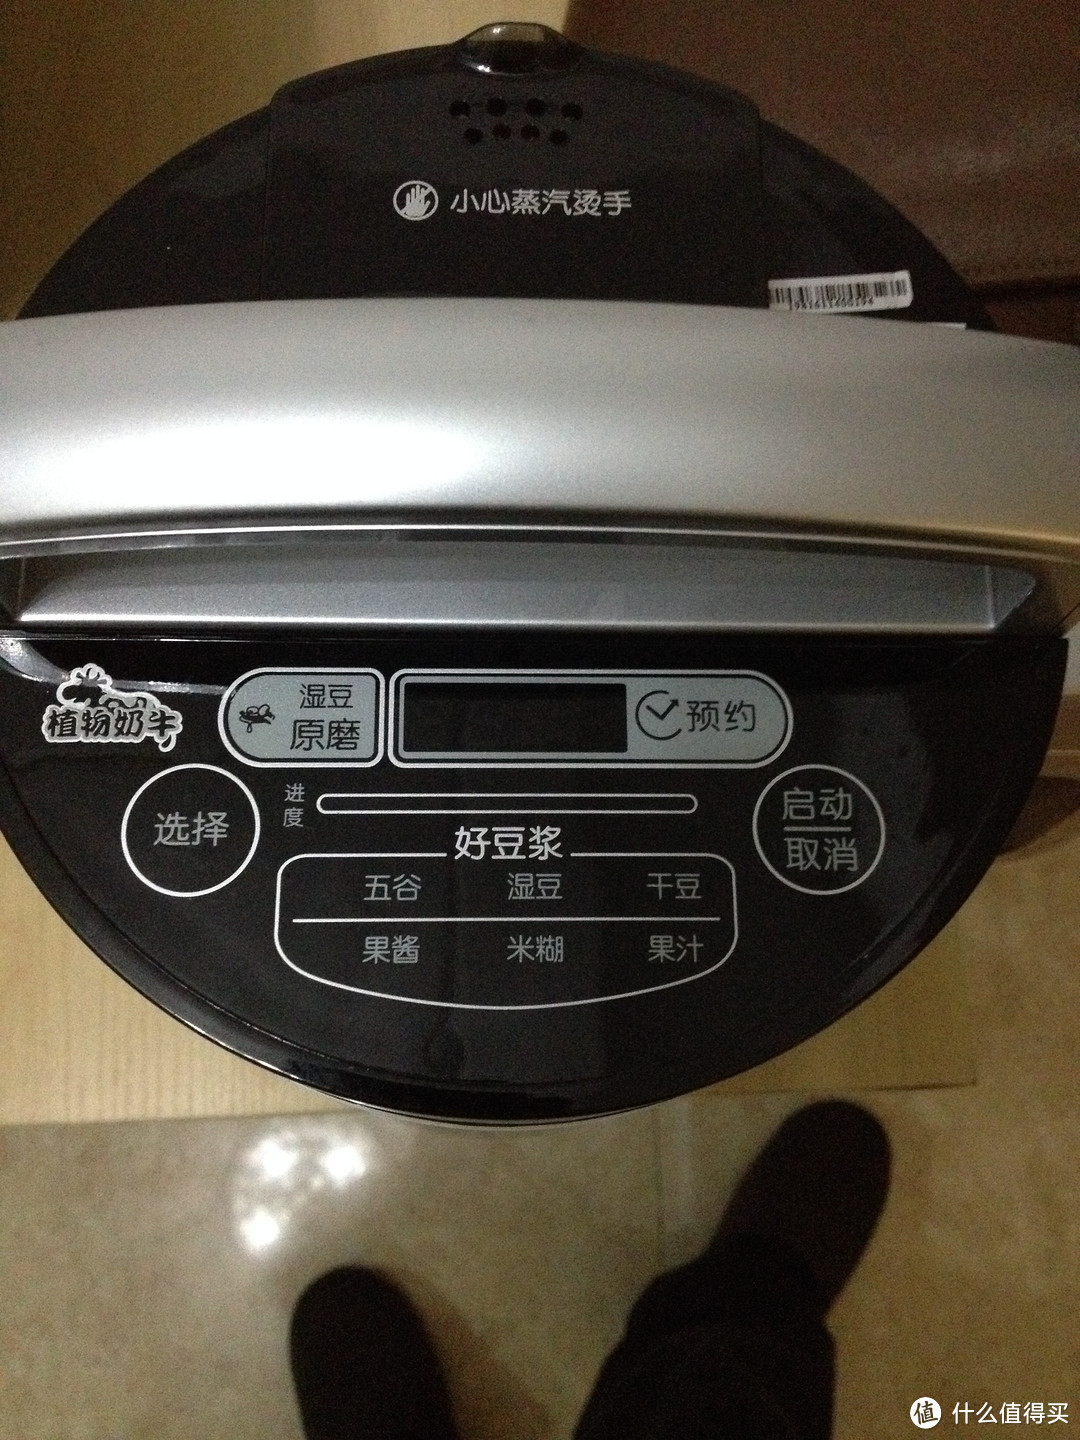 Joyoung 九阳 植物奶牛 智能预约系列 DJ11B-D19D 豆浆机，每天早上多睡一小时